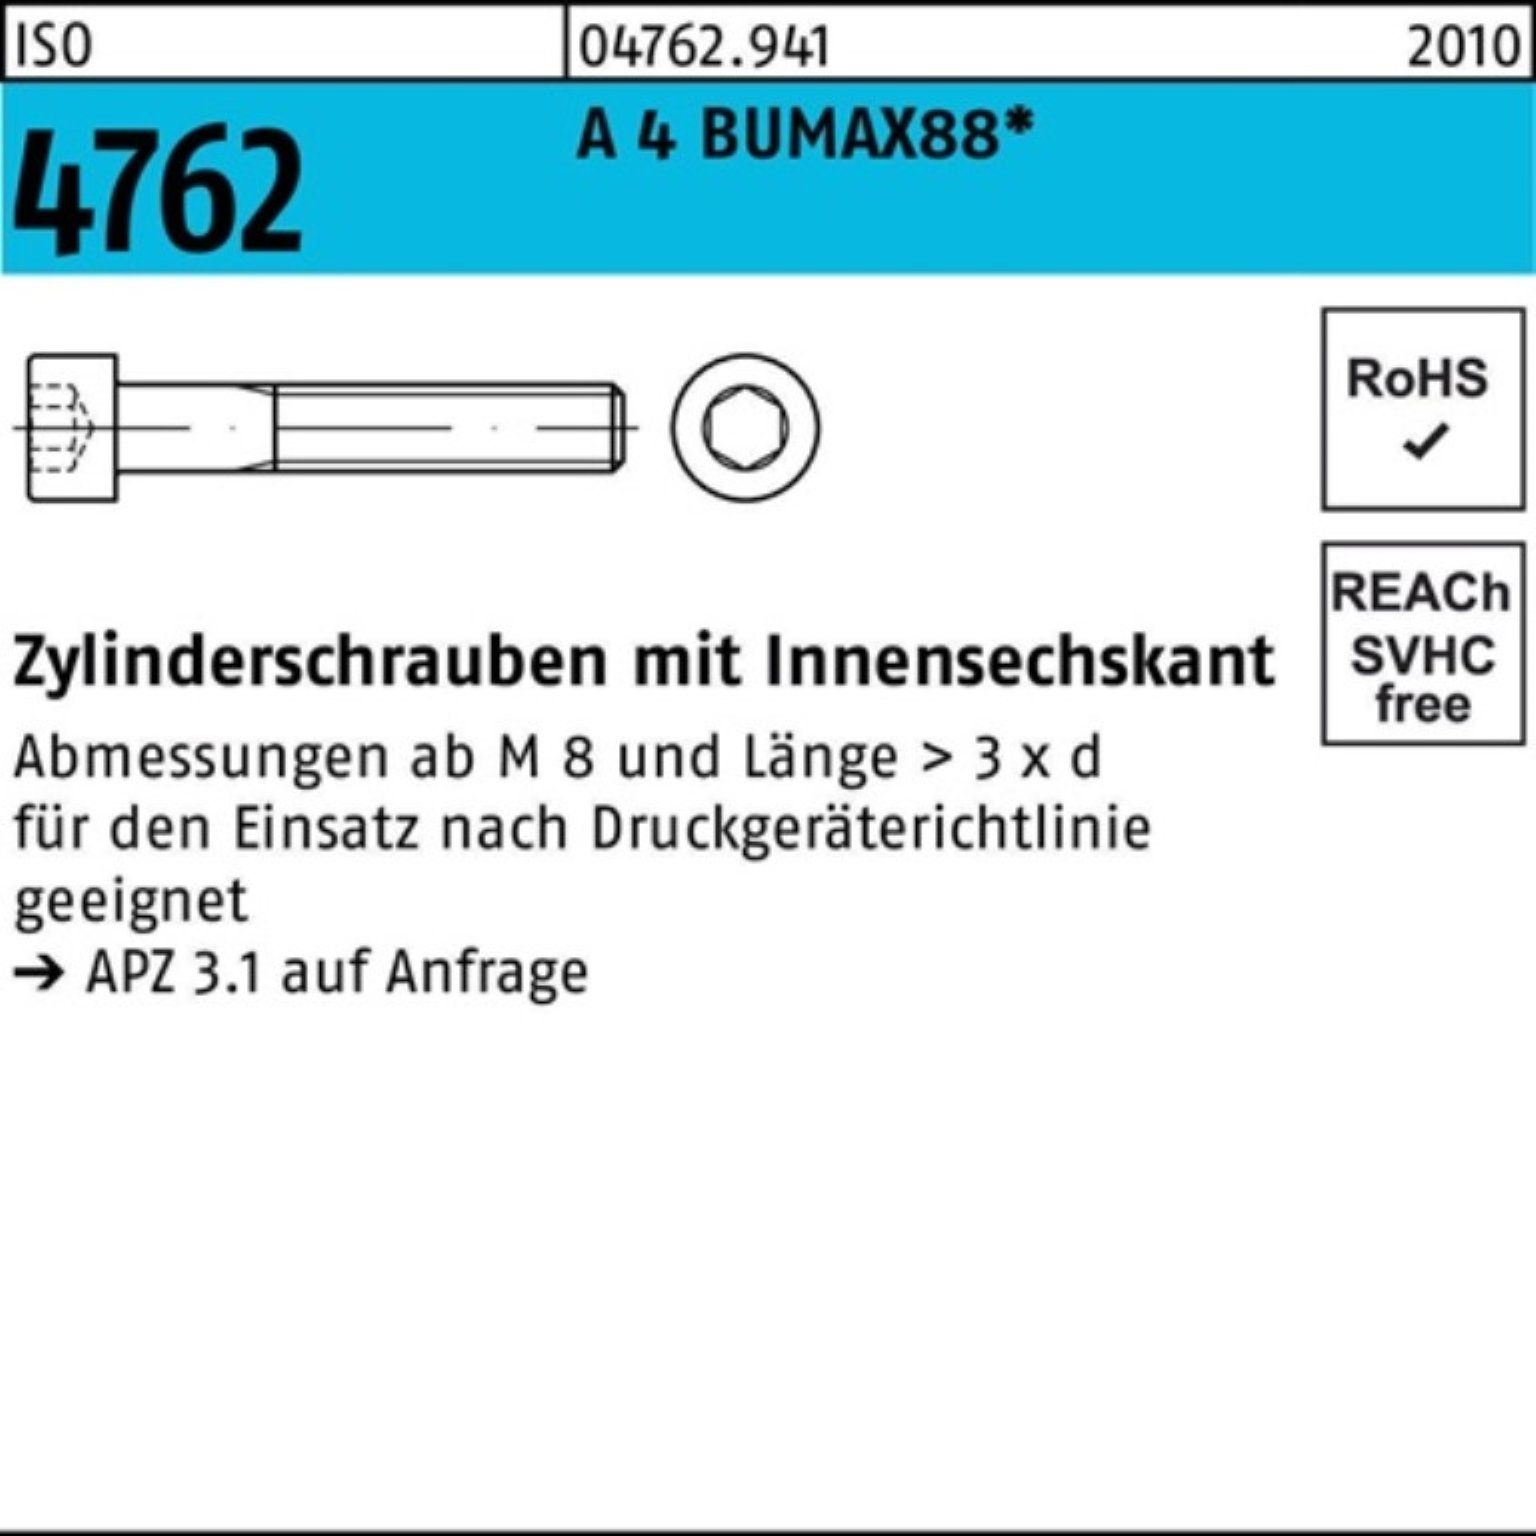 80 4 25 4762 Bufab ISO A Innen-6kt 100er M16x BUMAX88 Pack Zylinderschraube Zylinderschraube